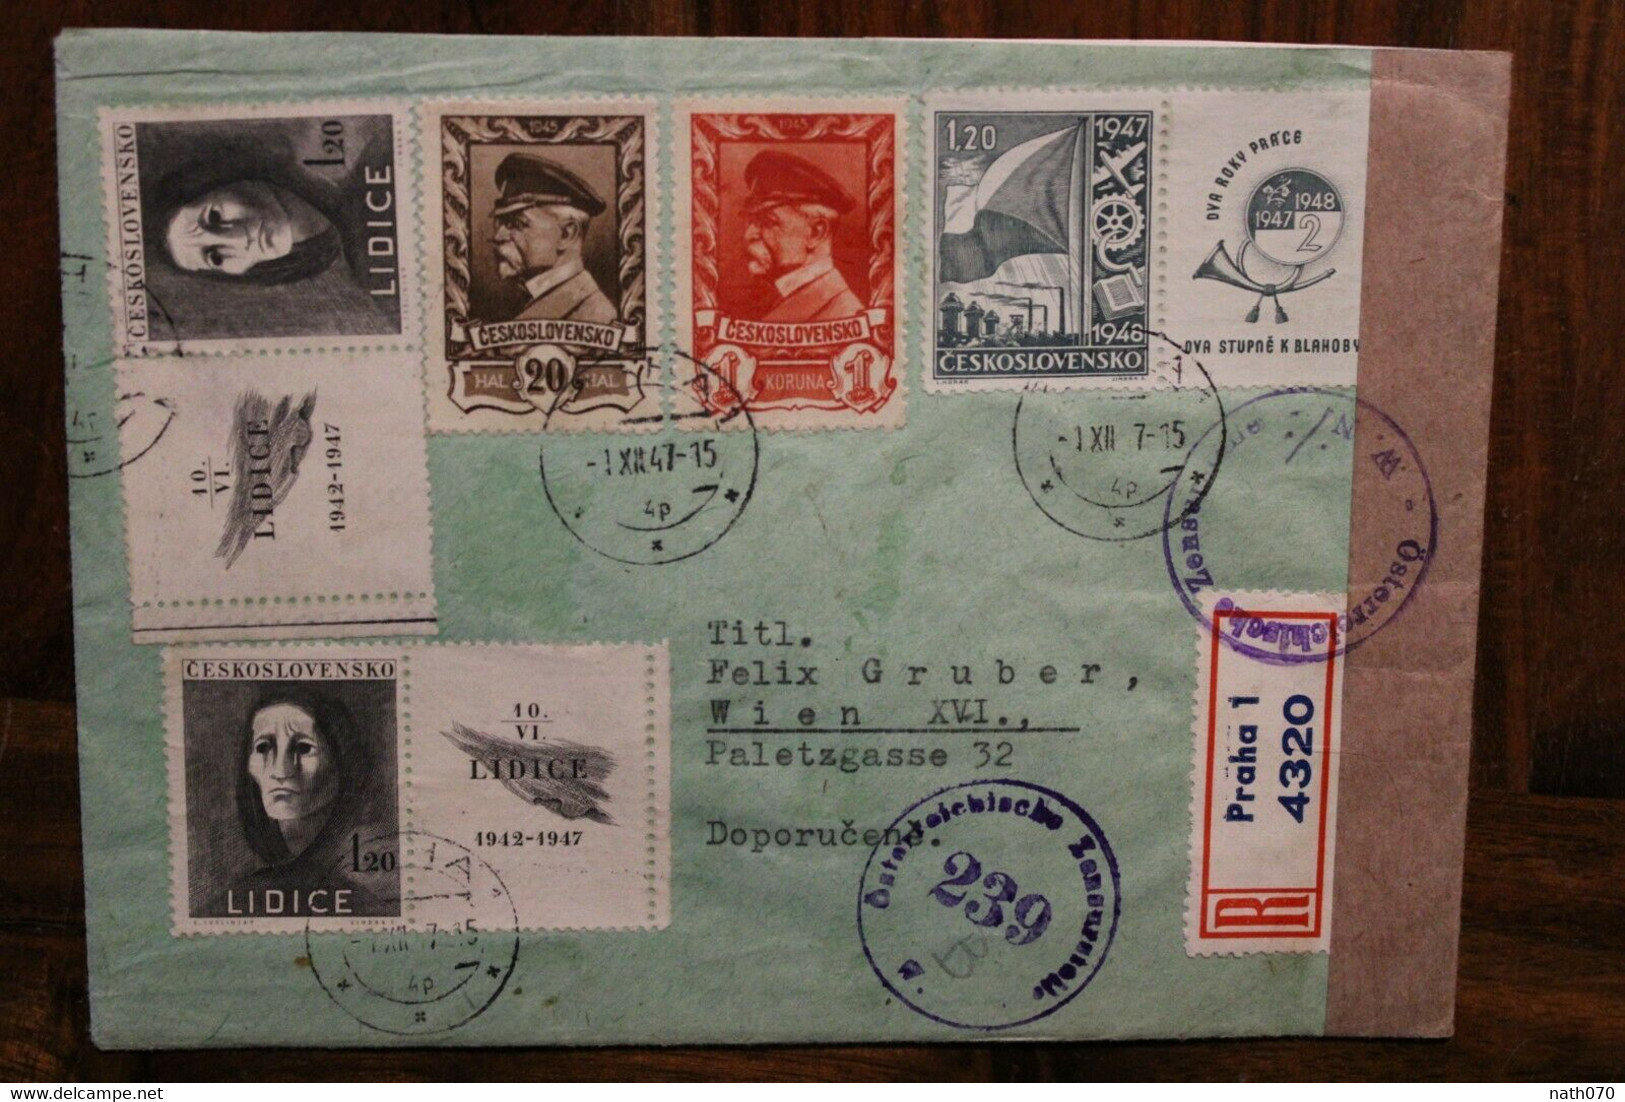 1947 Tschechoslowakei Cover Air Mail Letadlem Luftpost Zensur Osterreich Censure Alliés Einschreiben Recommandé - Covers & Documents